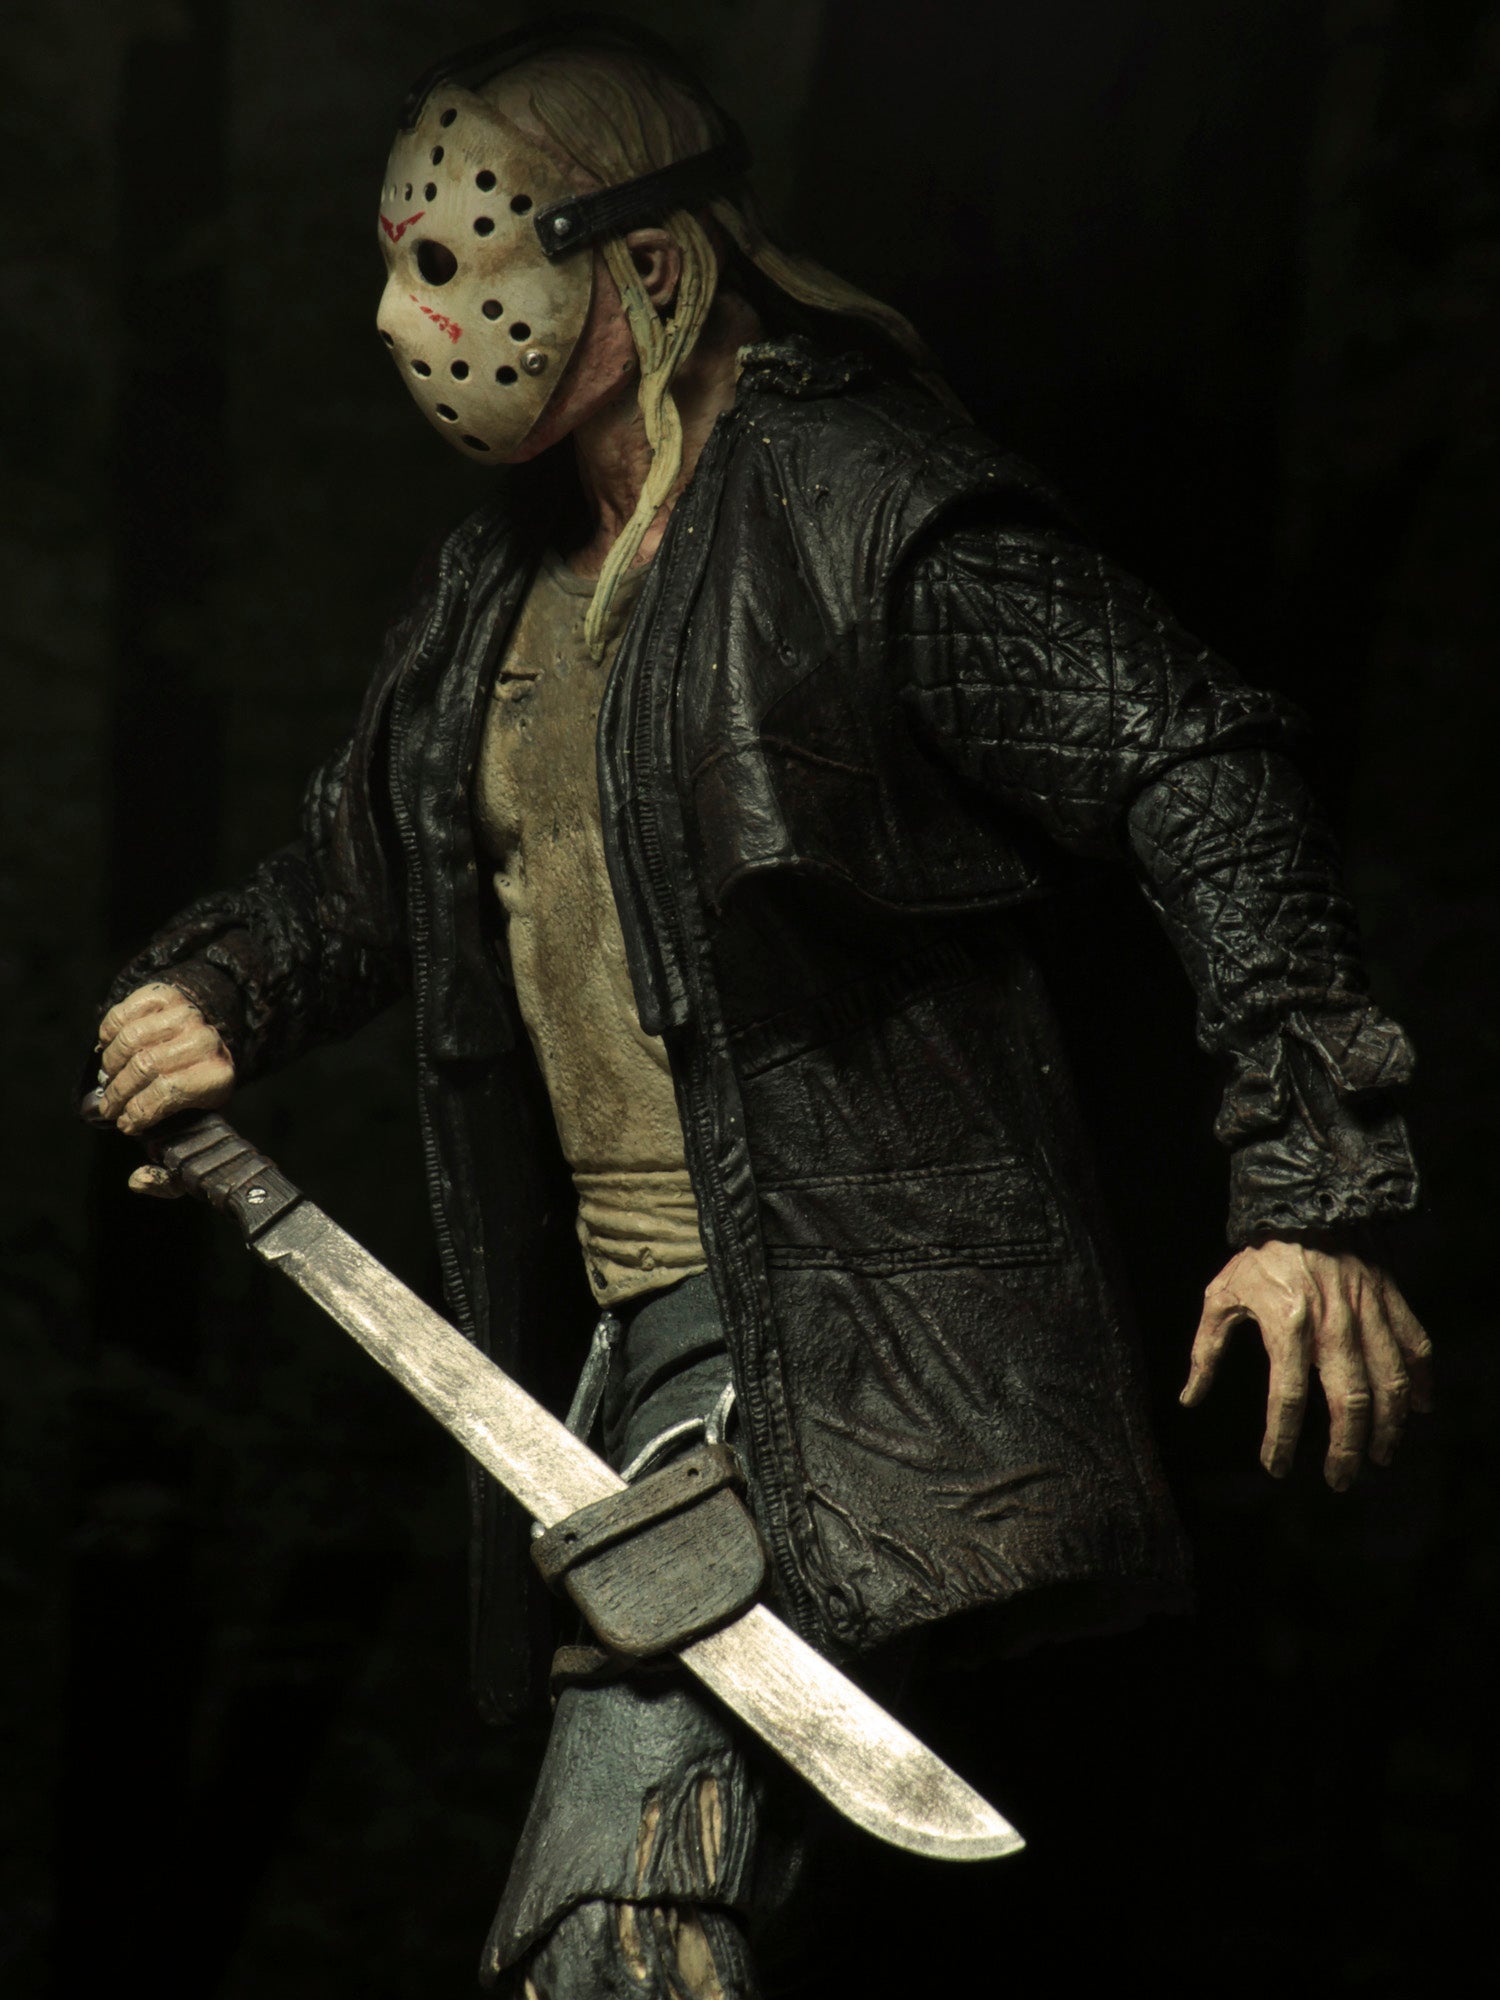 NECA - Friday the 13th - 7" Figure - Ultimate Jason (2009 remake) - costumes.com